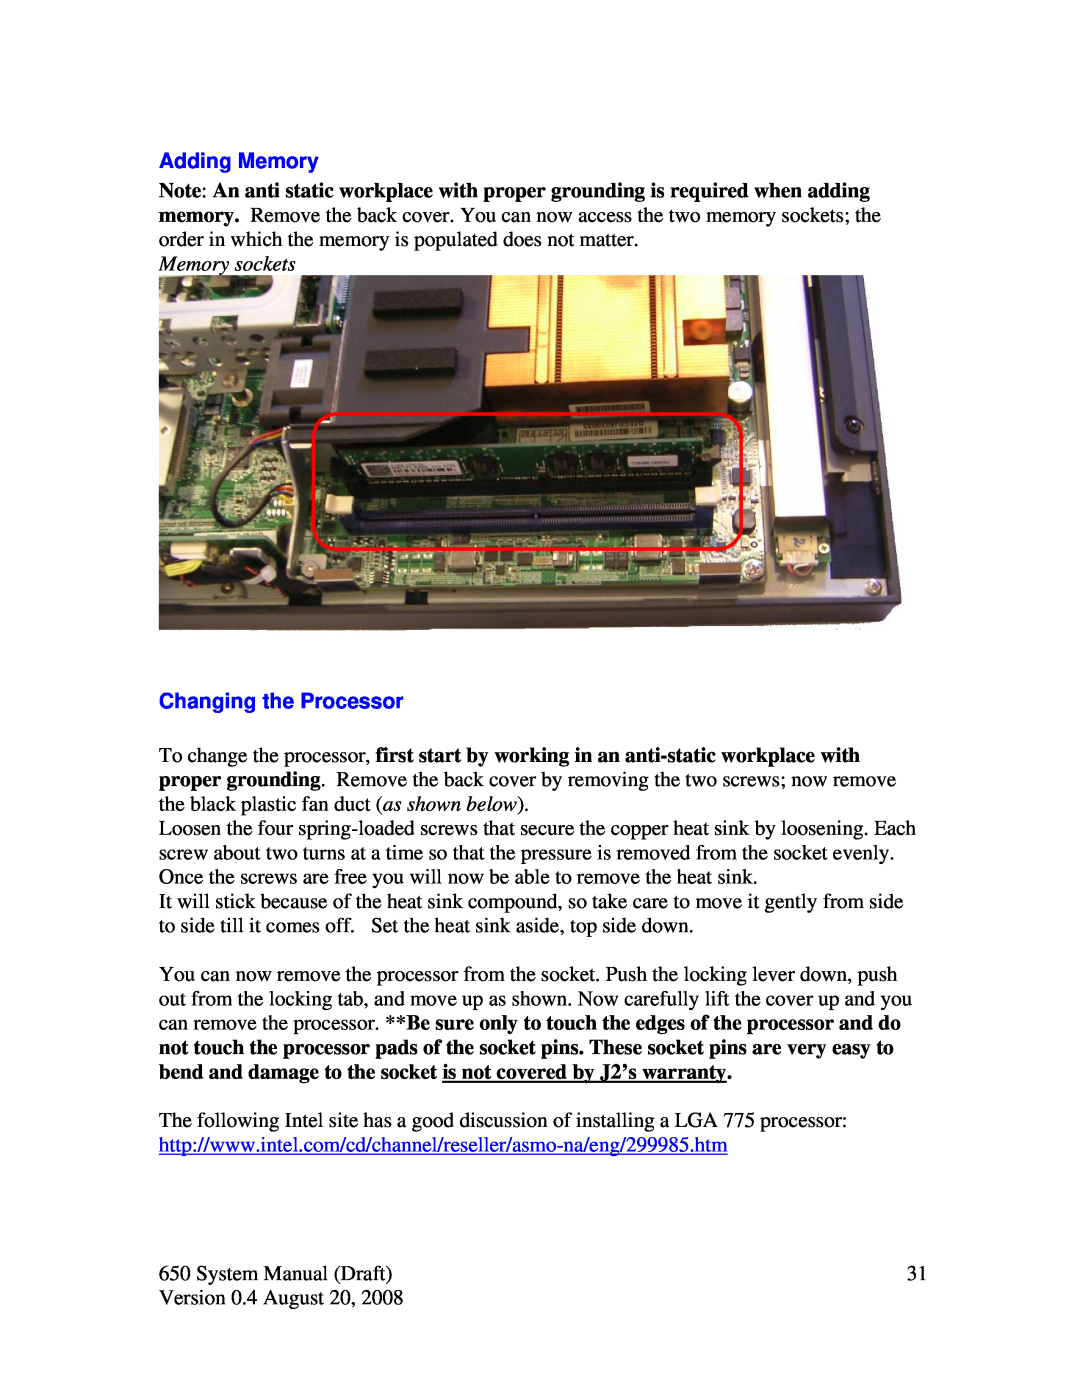 Intel J2 650 system manual Adding Memory, Memory sockets, Changing the Processor 